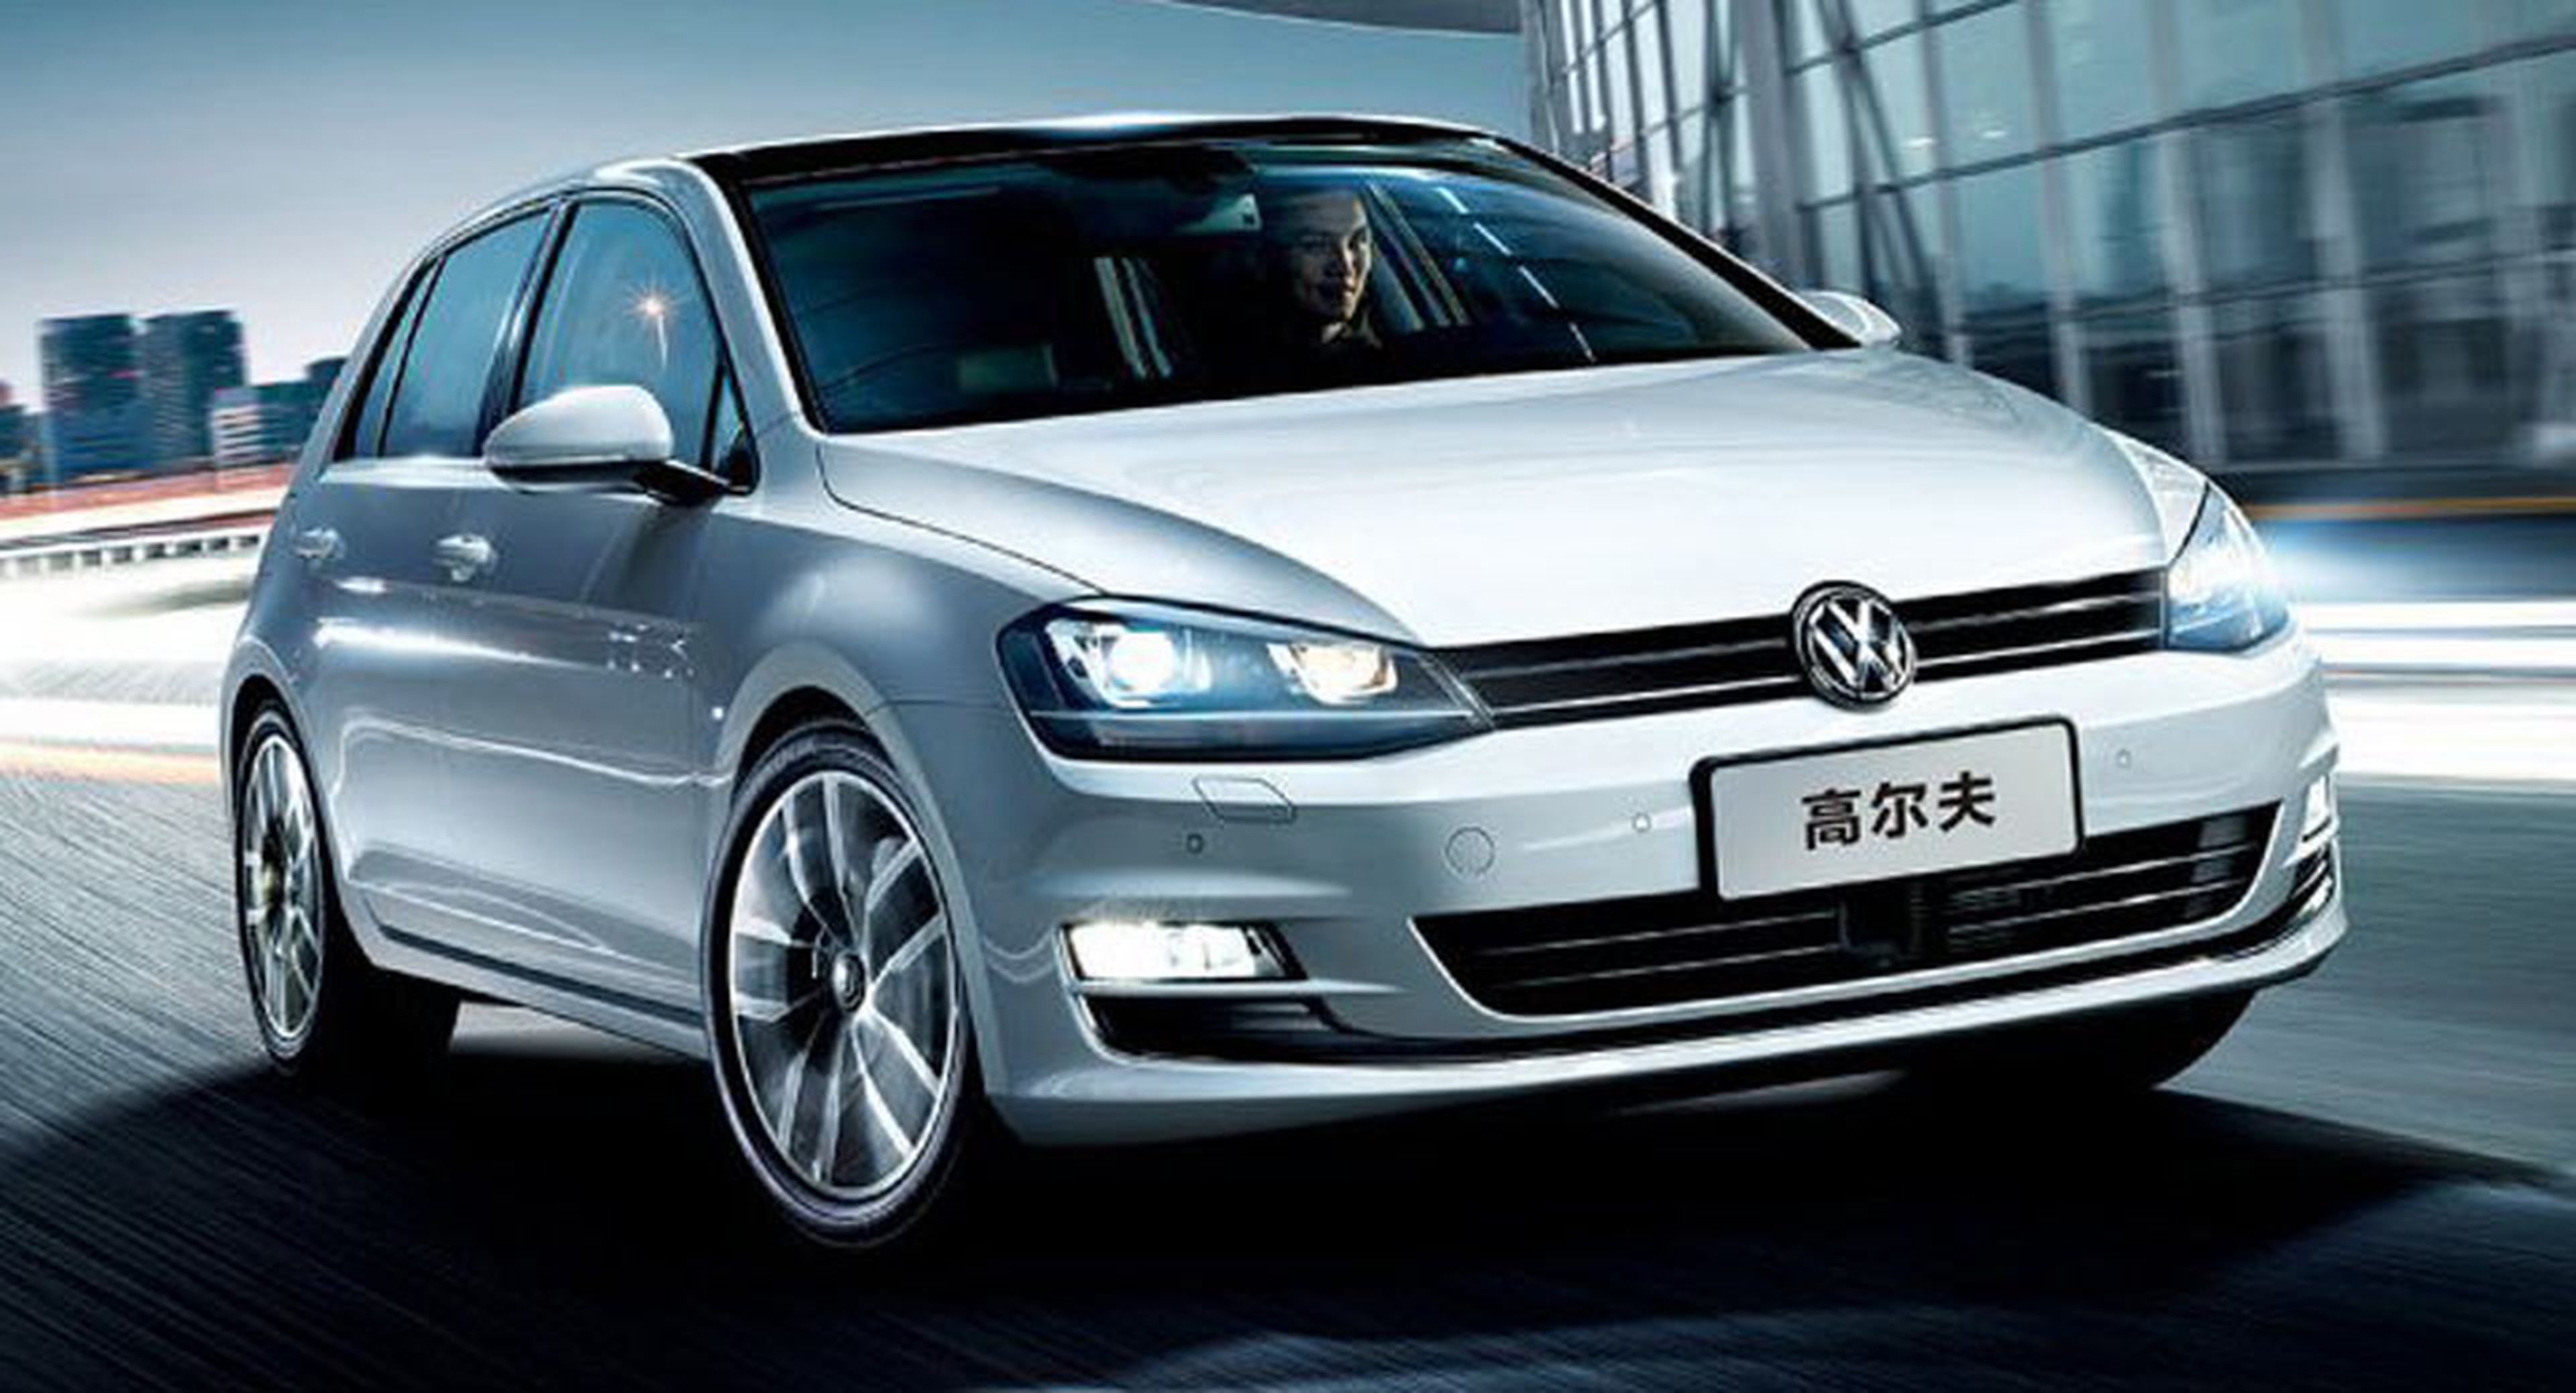 Llamada a taller de VW en China a unas 600.000 unidades